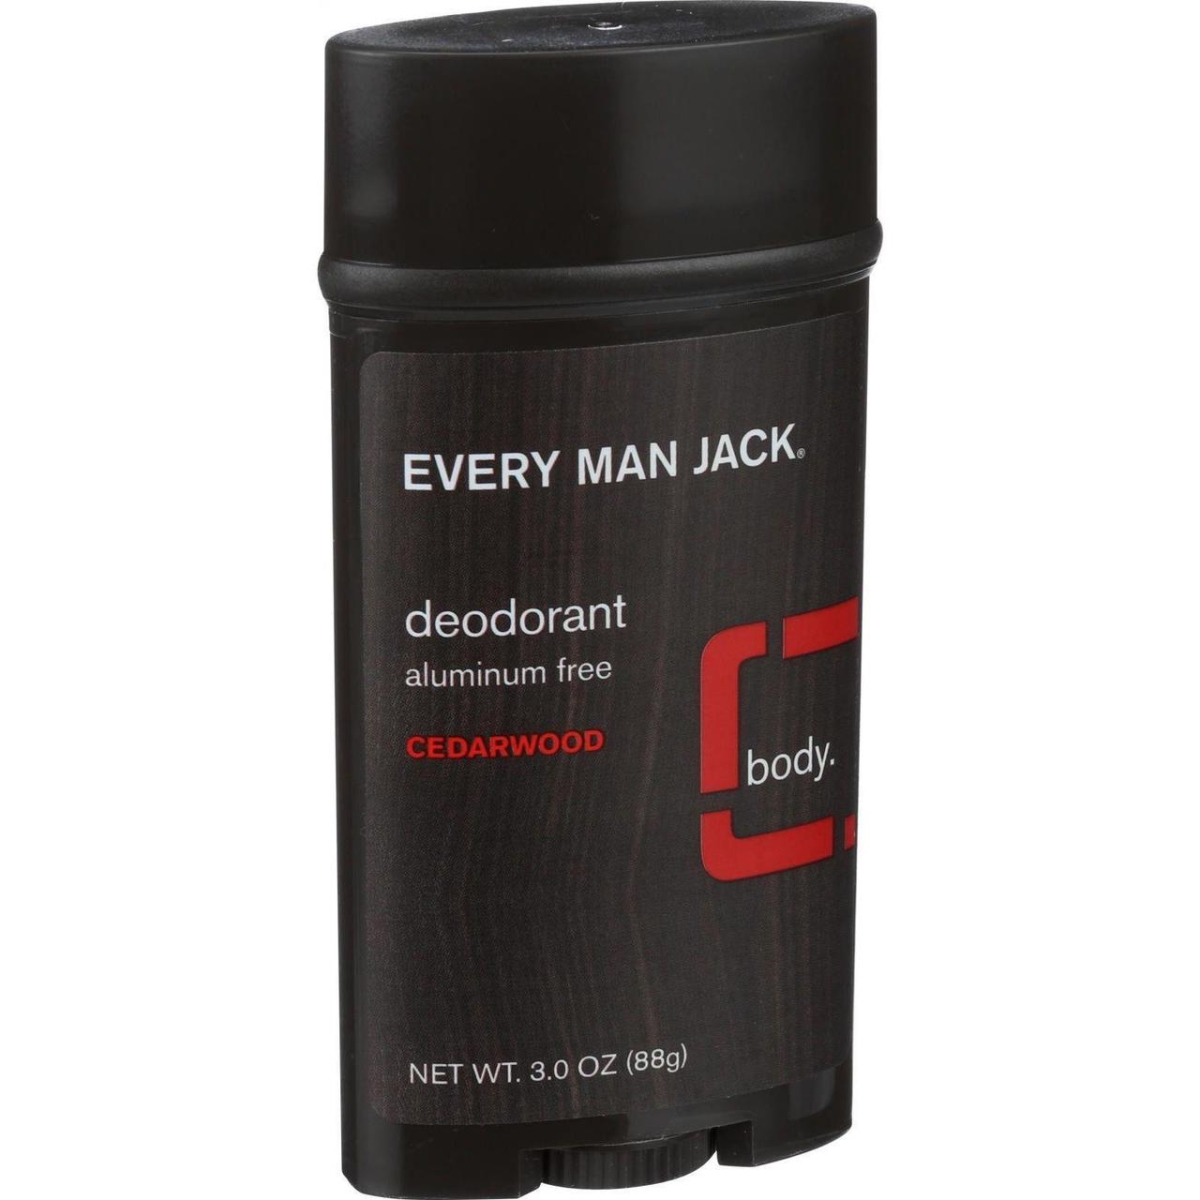 Hg0689539 3 Oz Aluminum Free Body Deodorant, Cedarwood